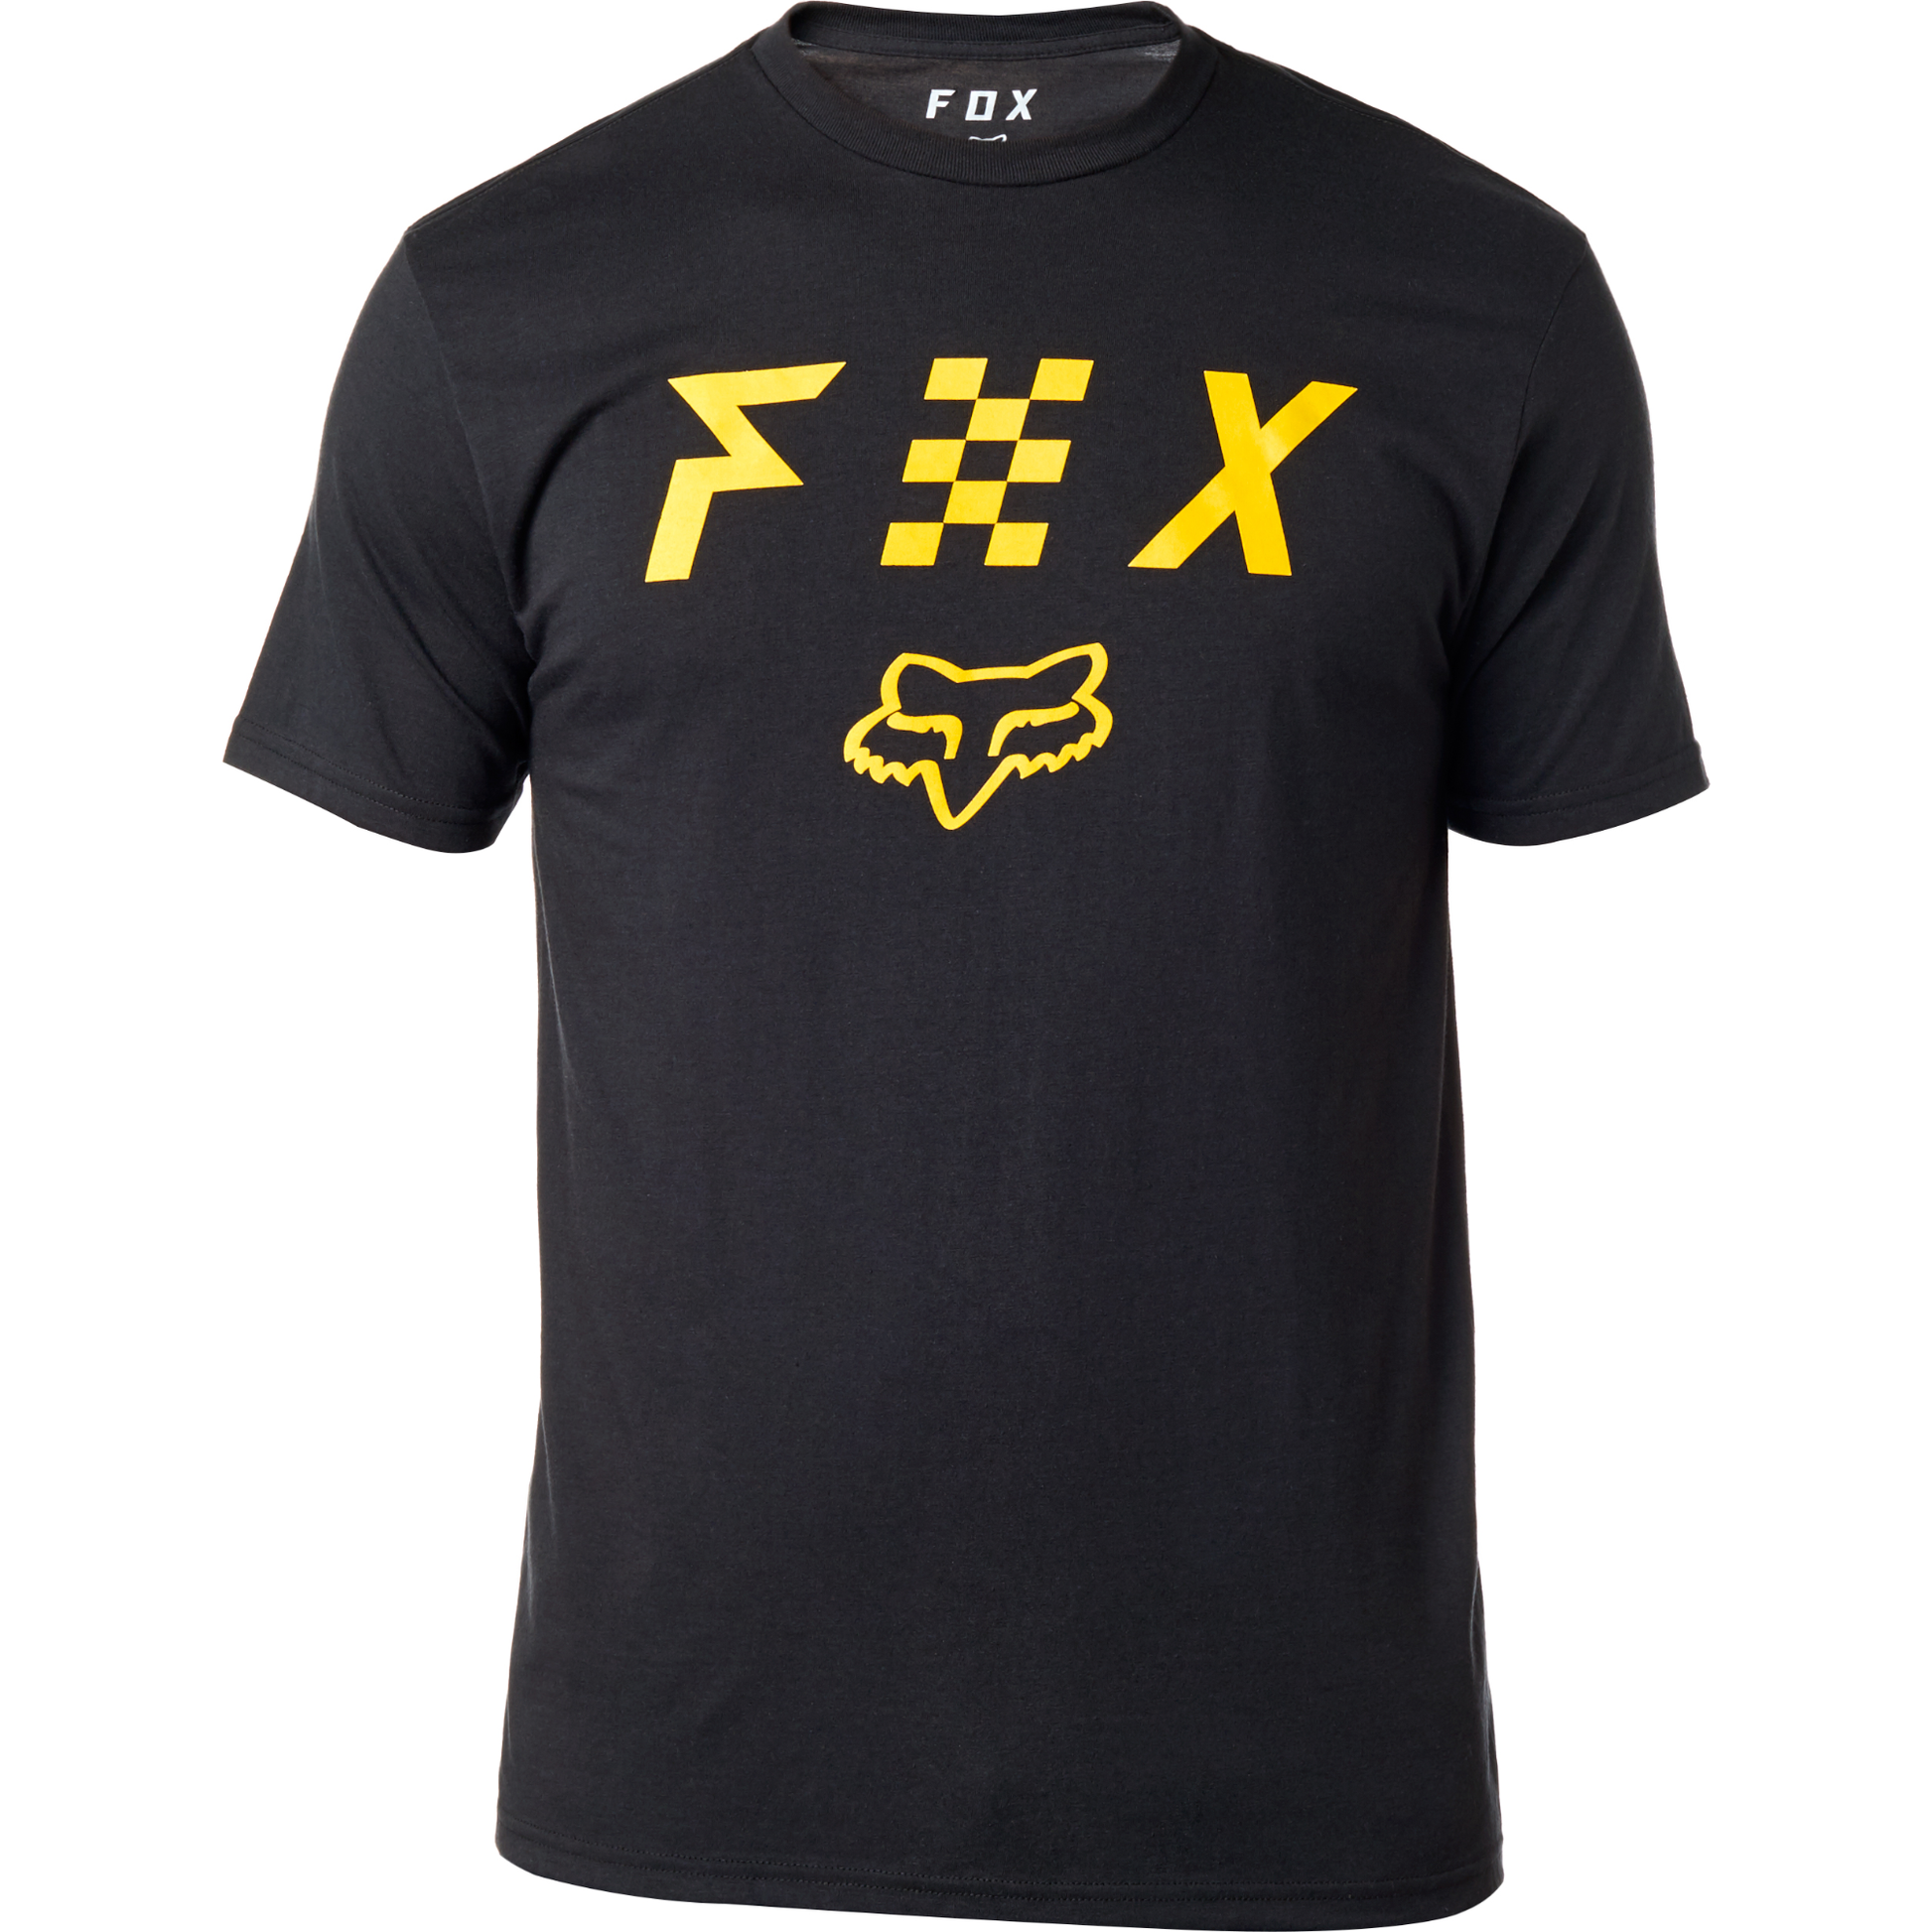 Fox Racing Avowed Tee Black/Yellow Medium - ExtremeSupply.com